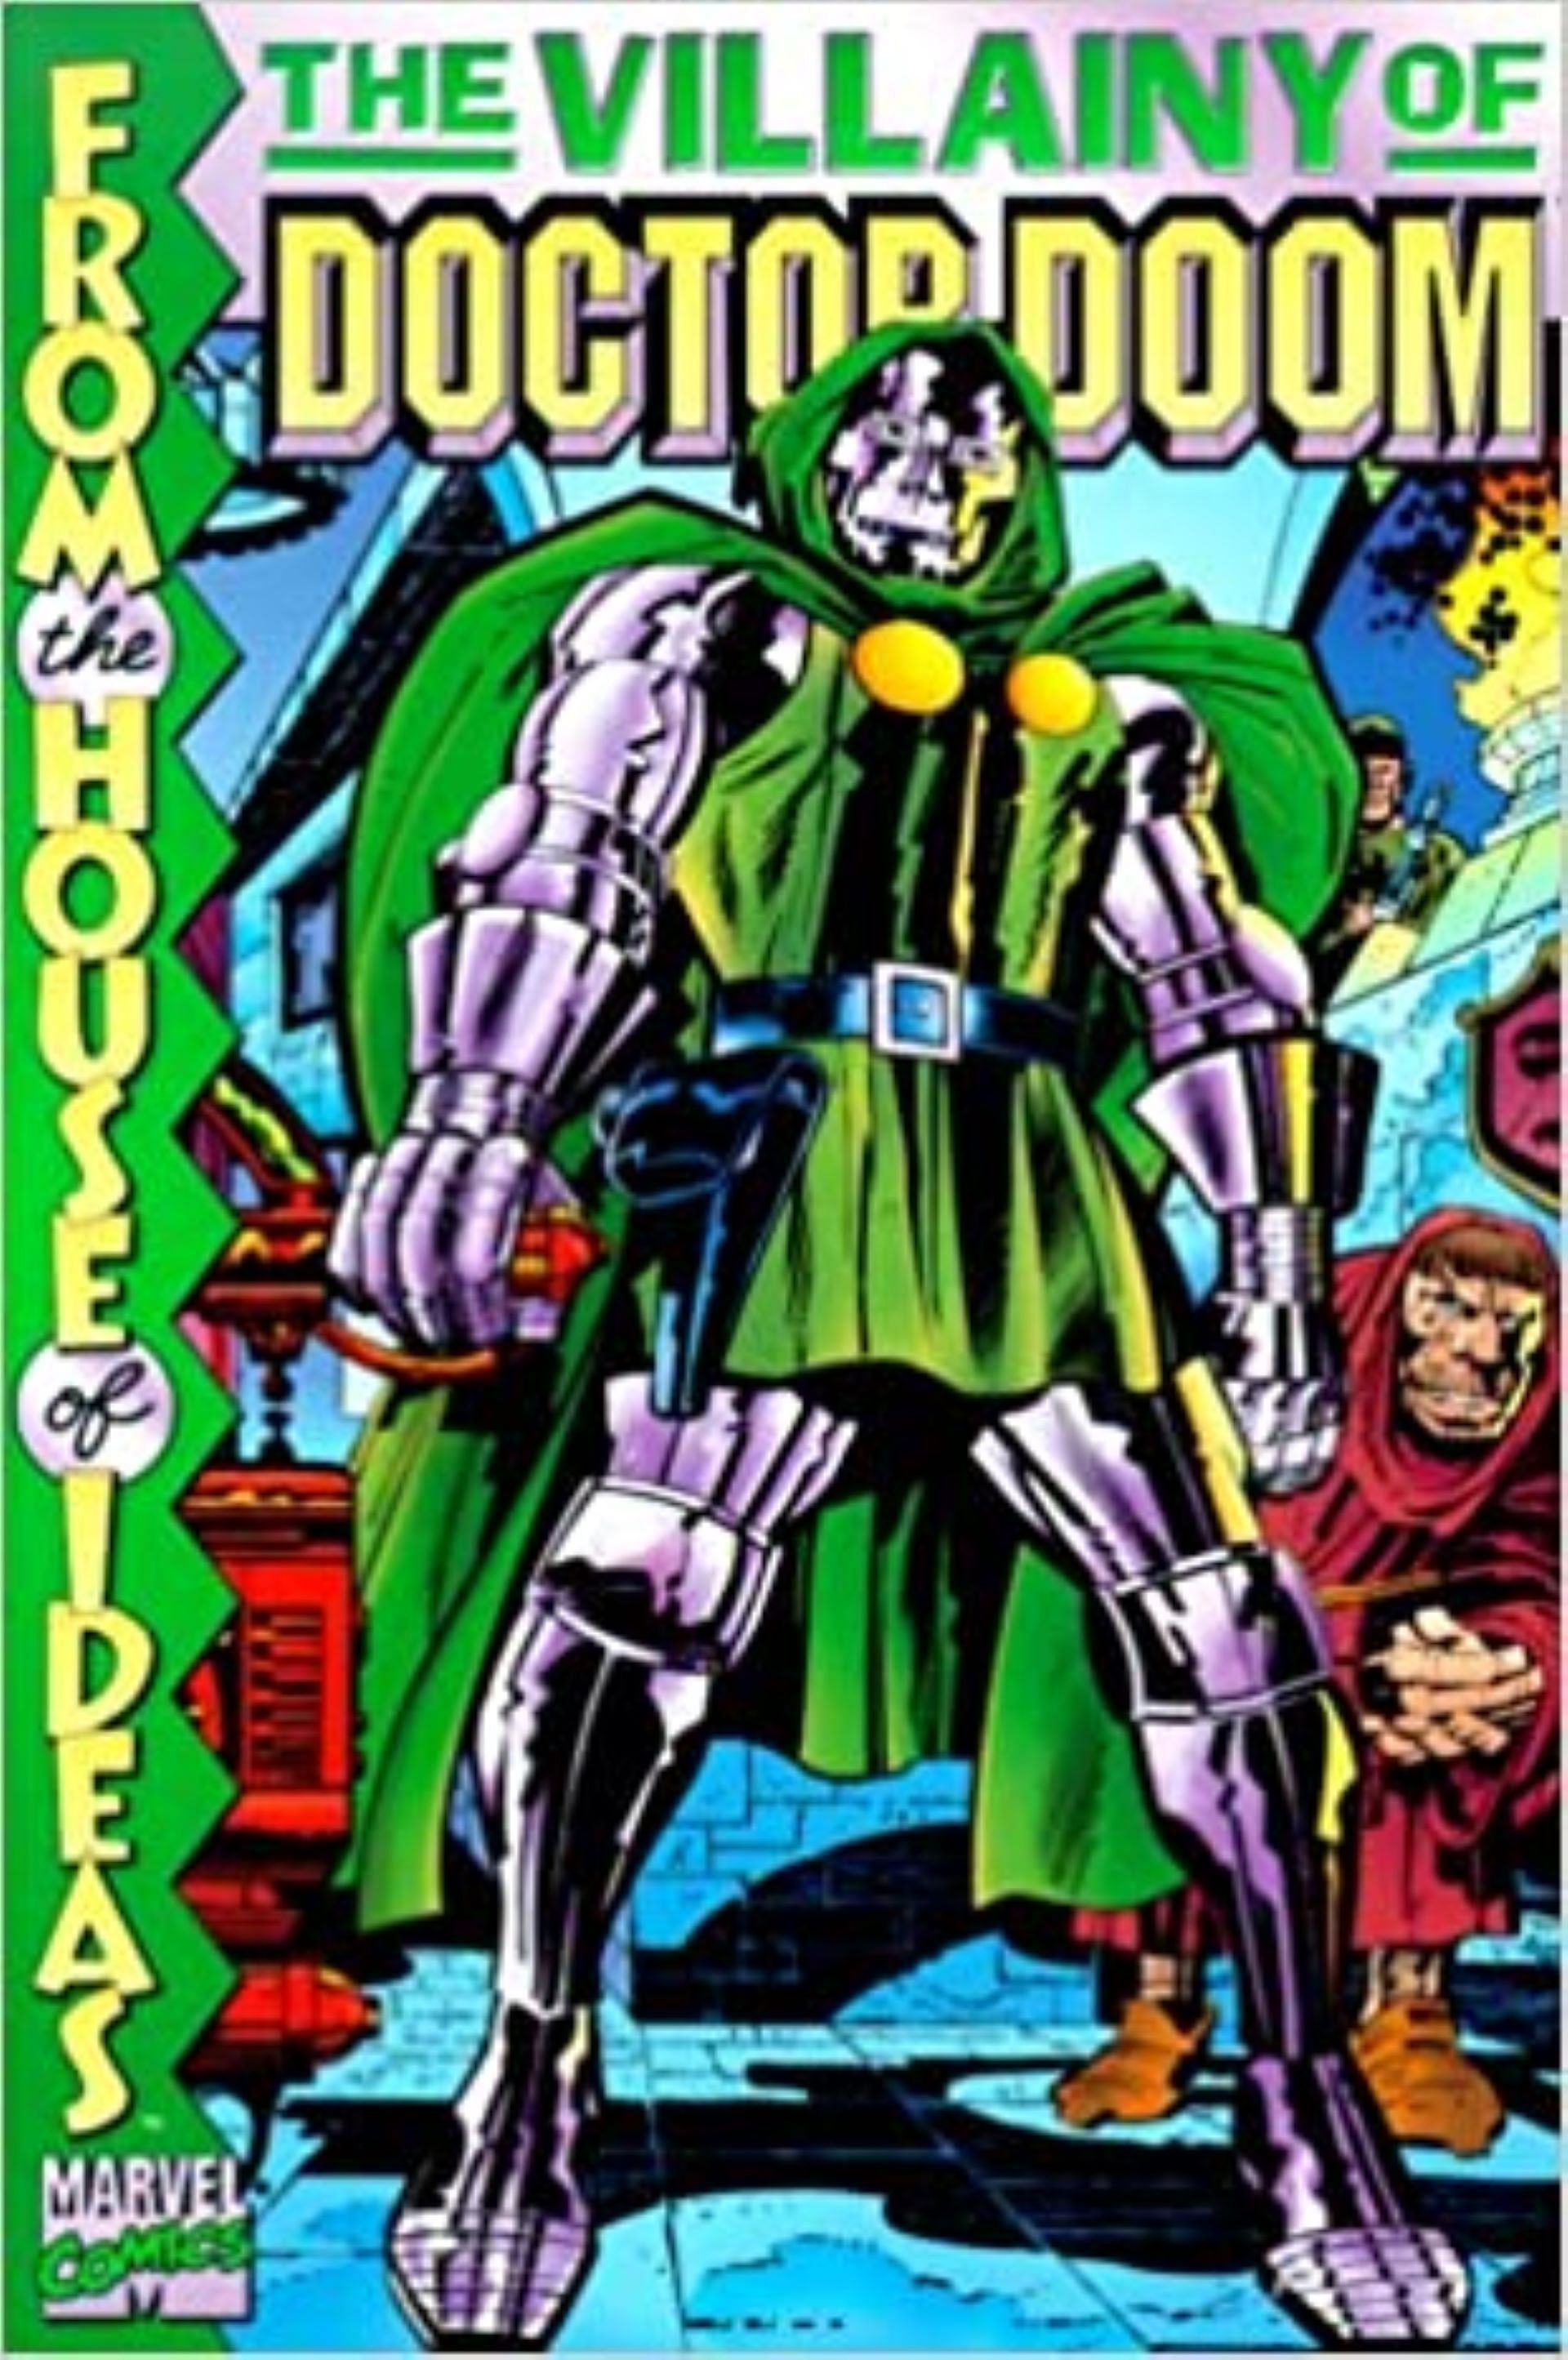 The comic discloses the villainous path of Doom (Image via Marvel)